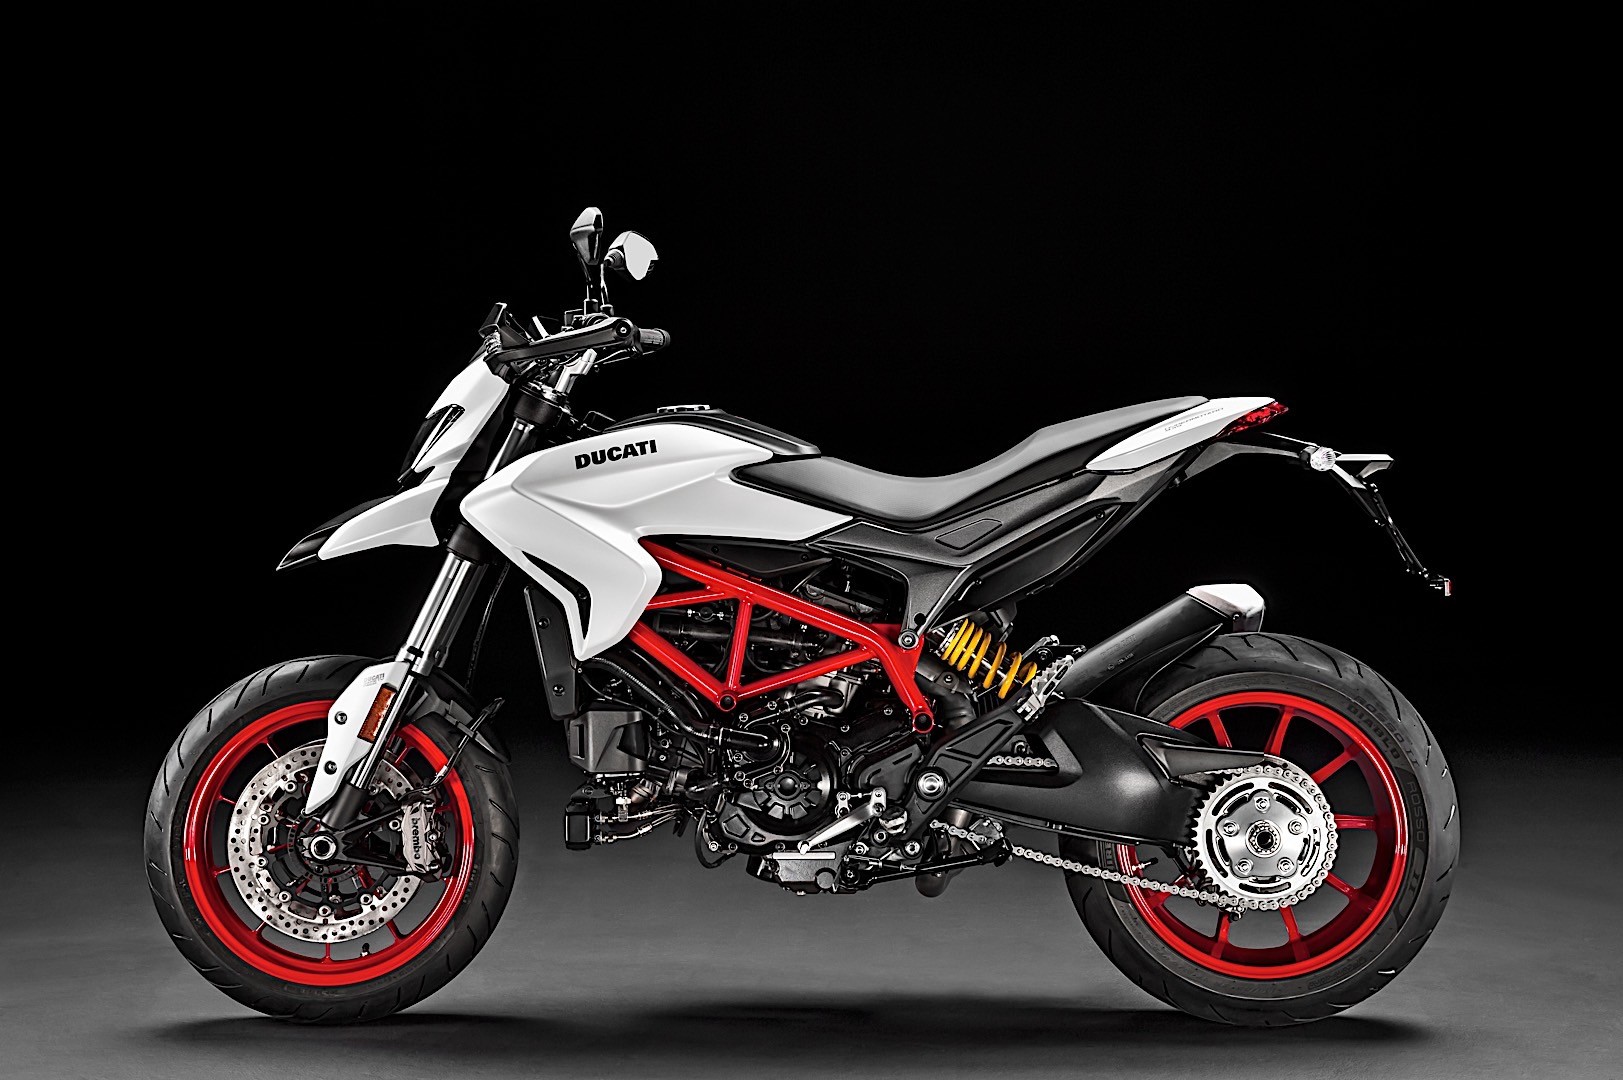 Ducati Hypermotard Lands At Jimmy Kimmel Live Promoting CHiPs Film ...